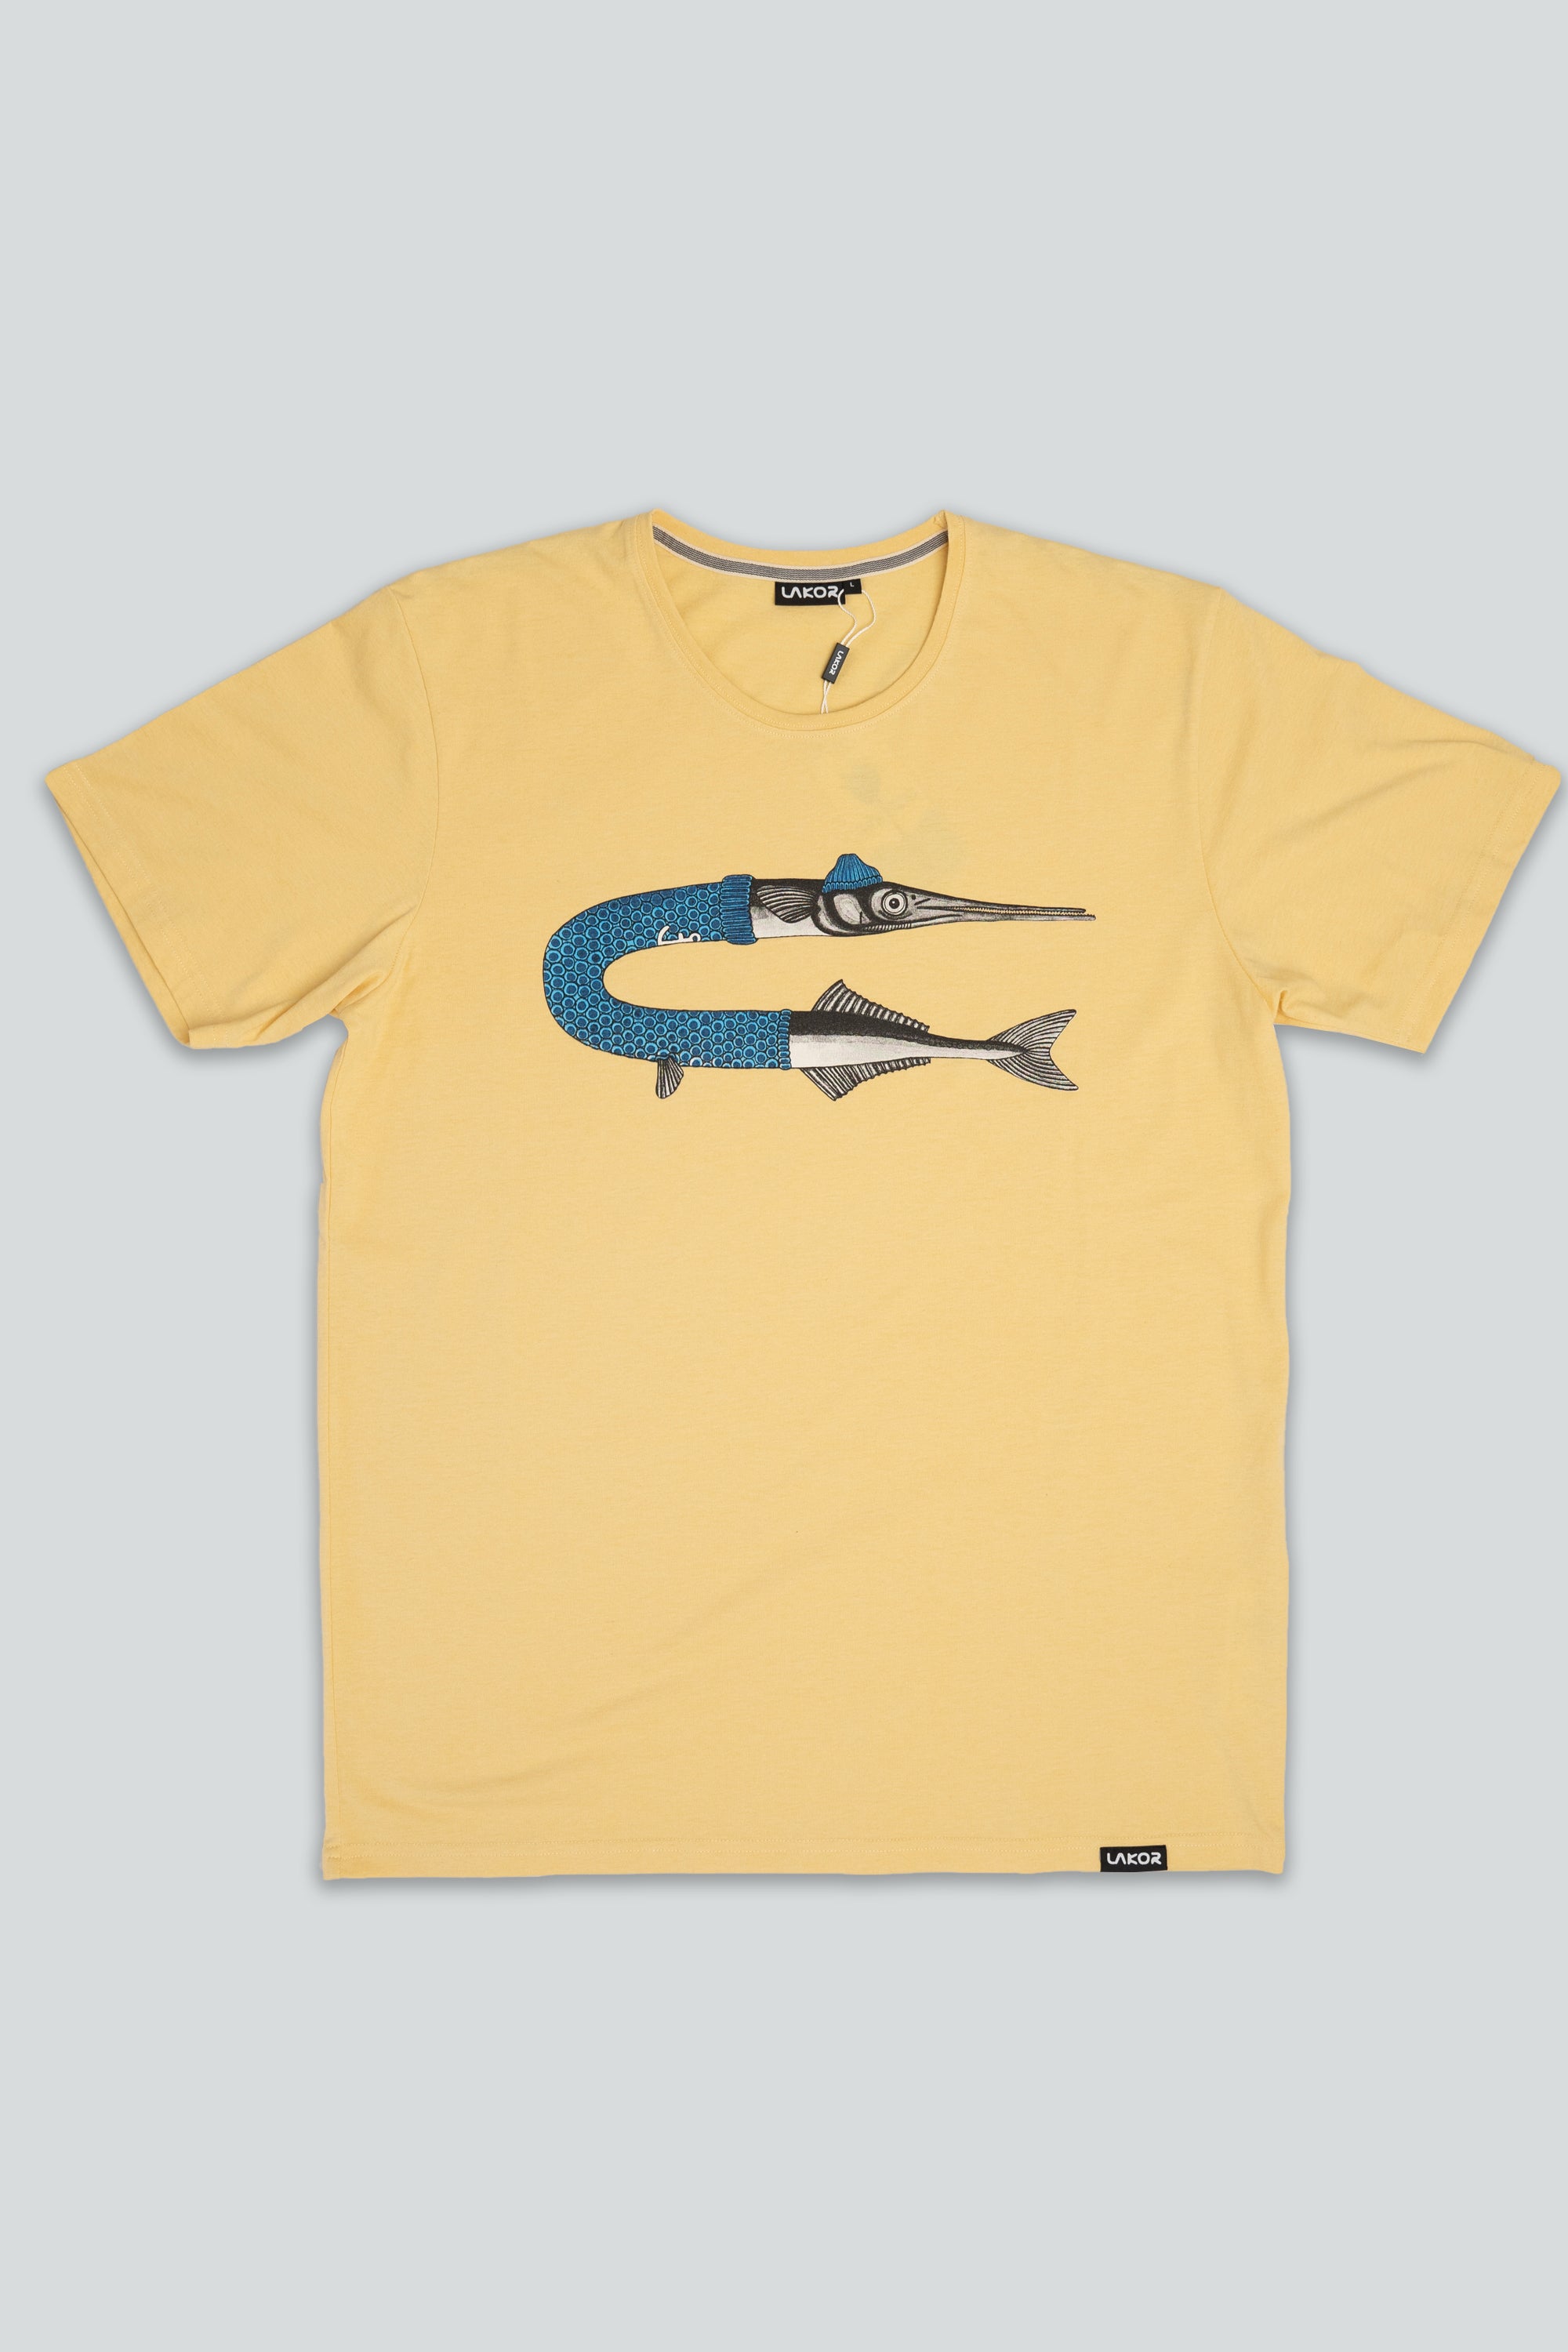 Lakor Soulwear Garfish T-Shirt